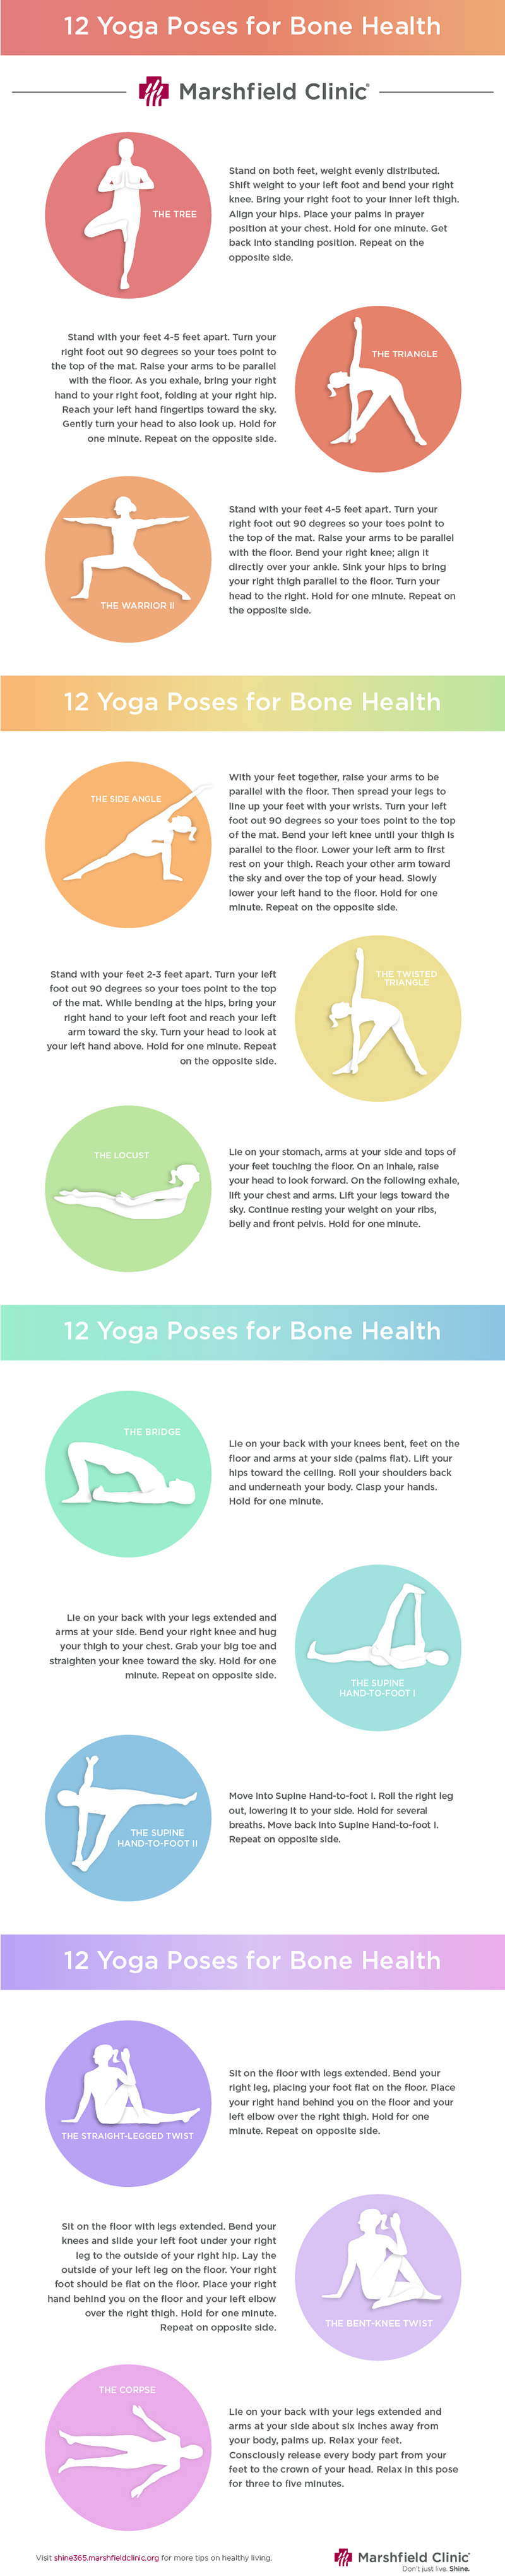 12 yoga poses for bone health - illustration